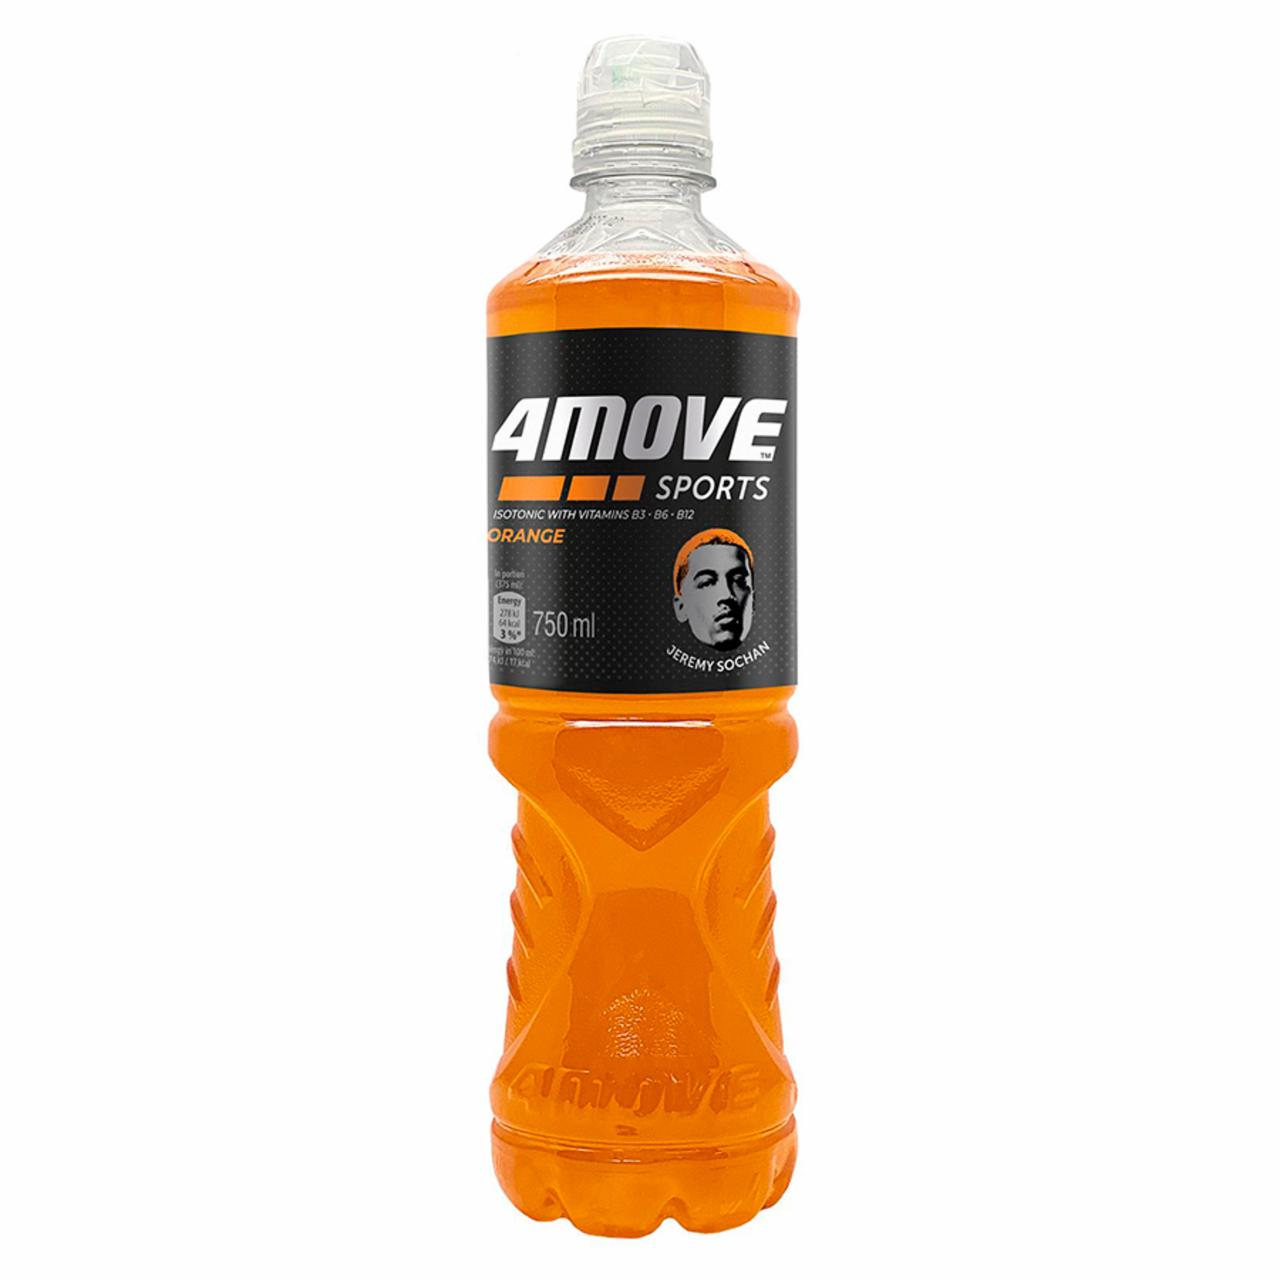 Fotografie - Professional Isotonic Drink Orange flavour 4Move